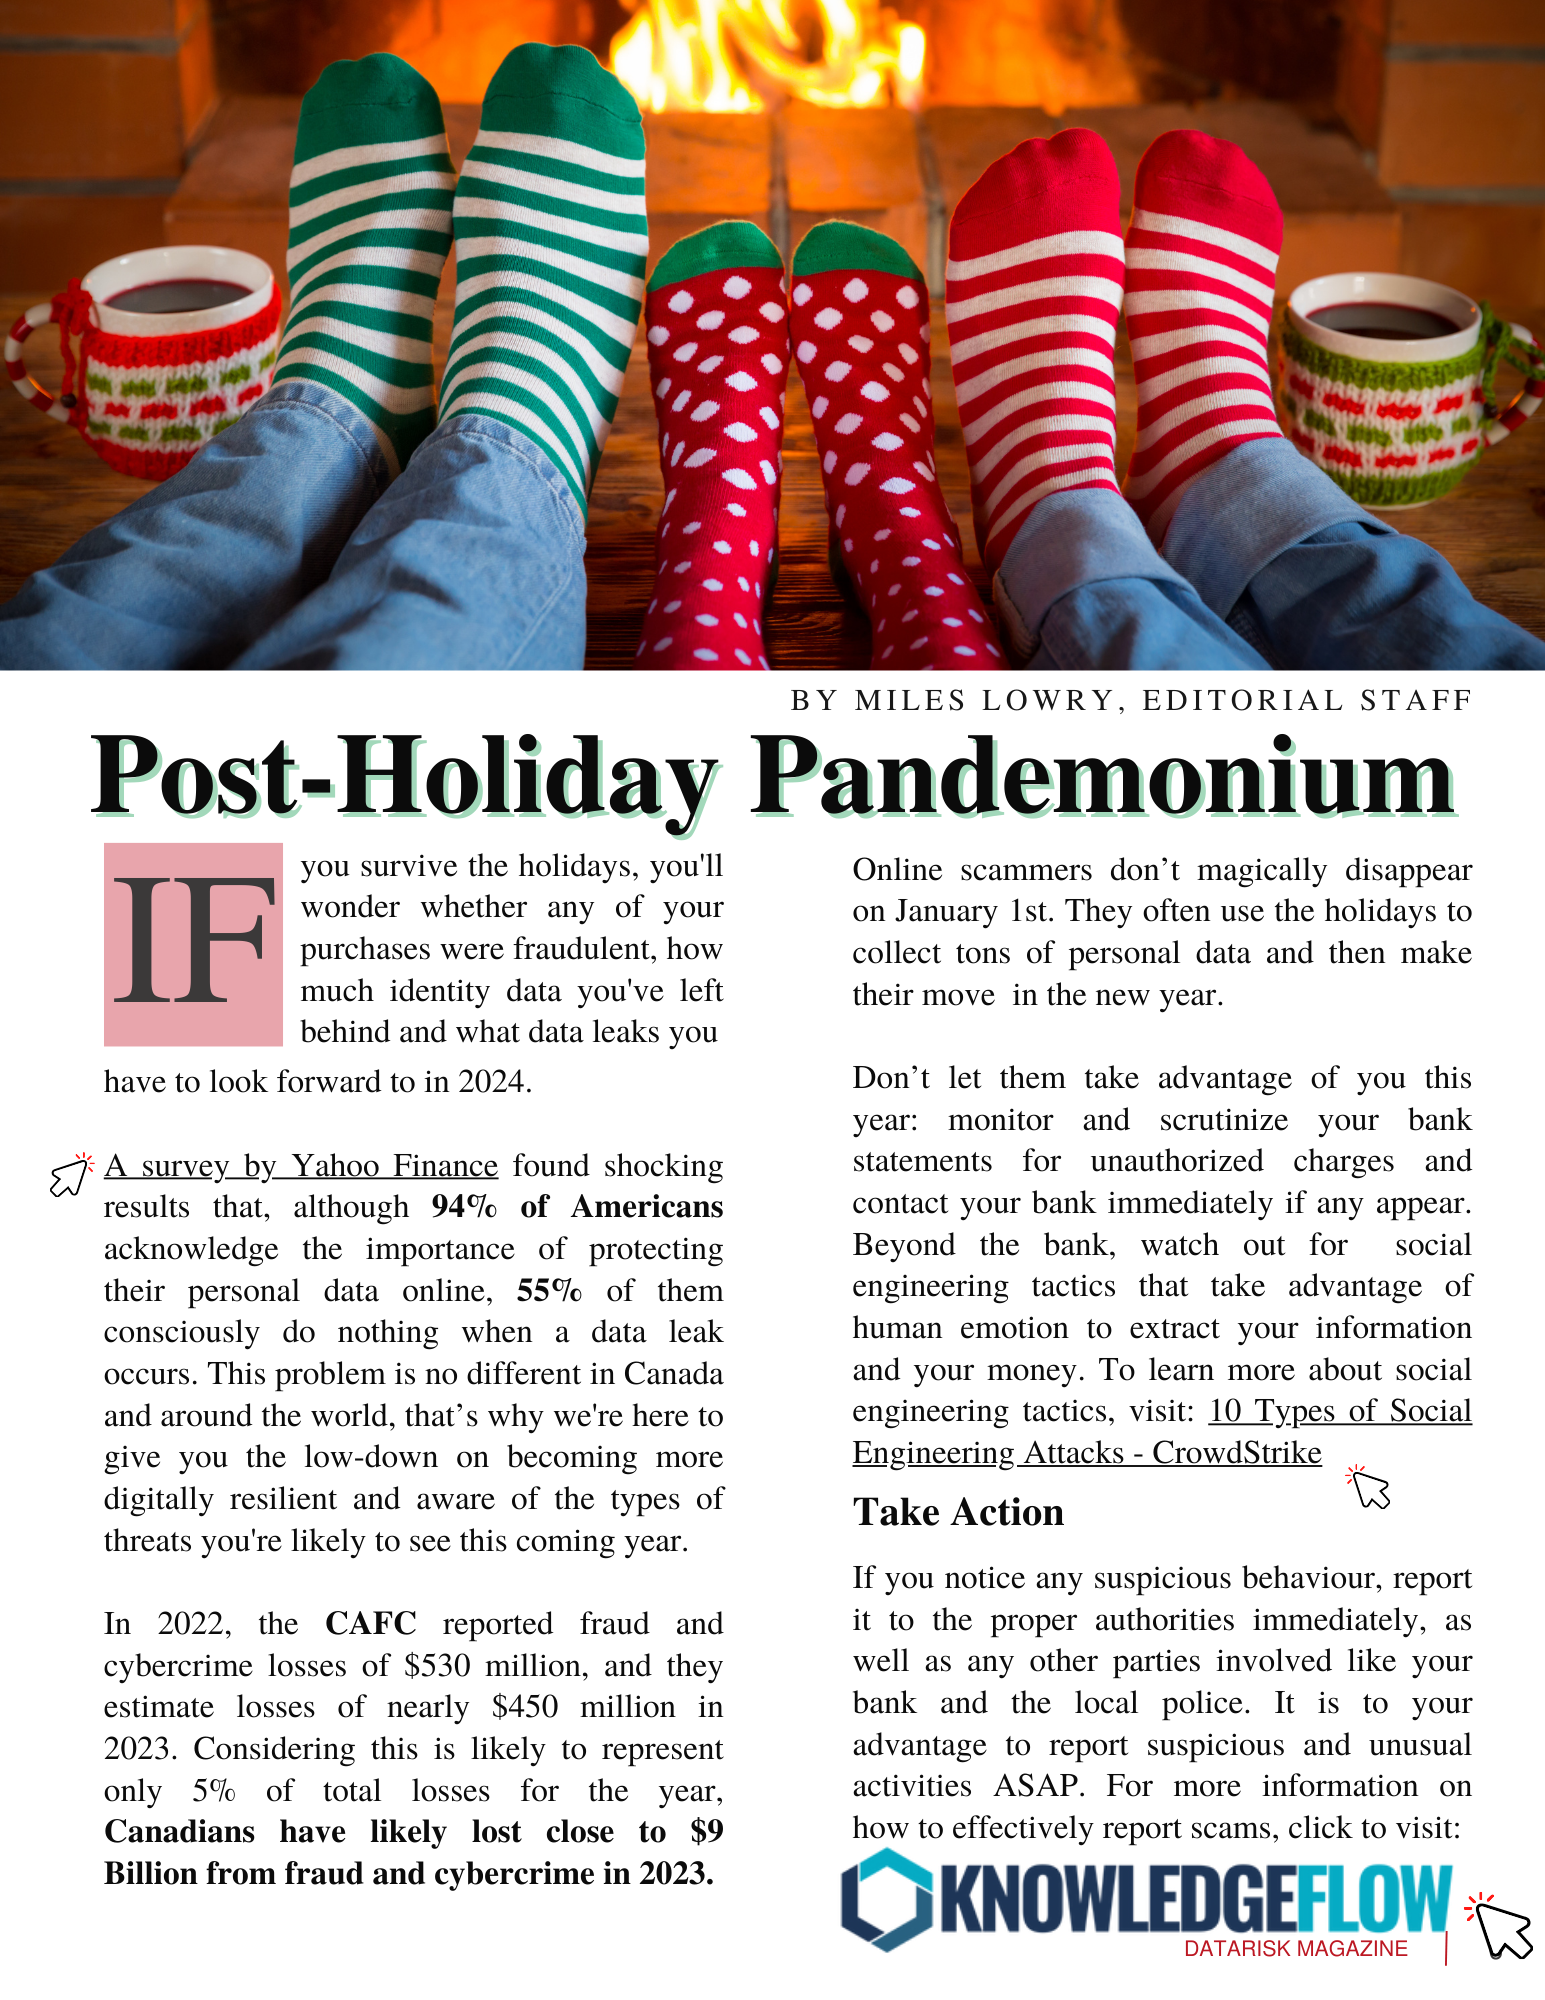 Article 4 Post Holiday Pandemonium